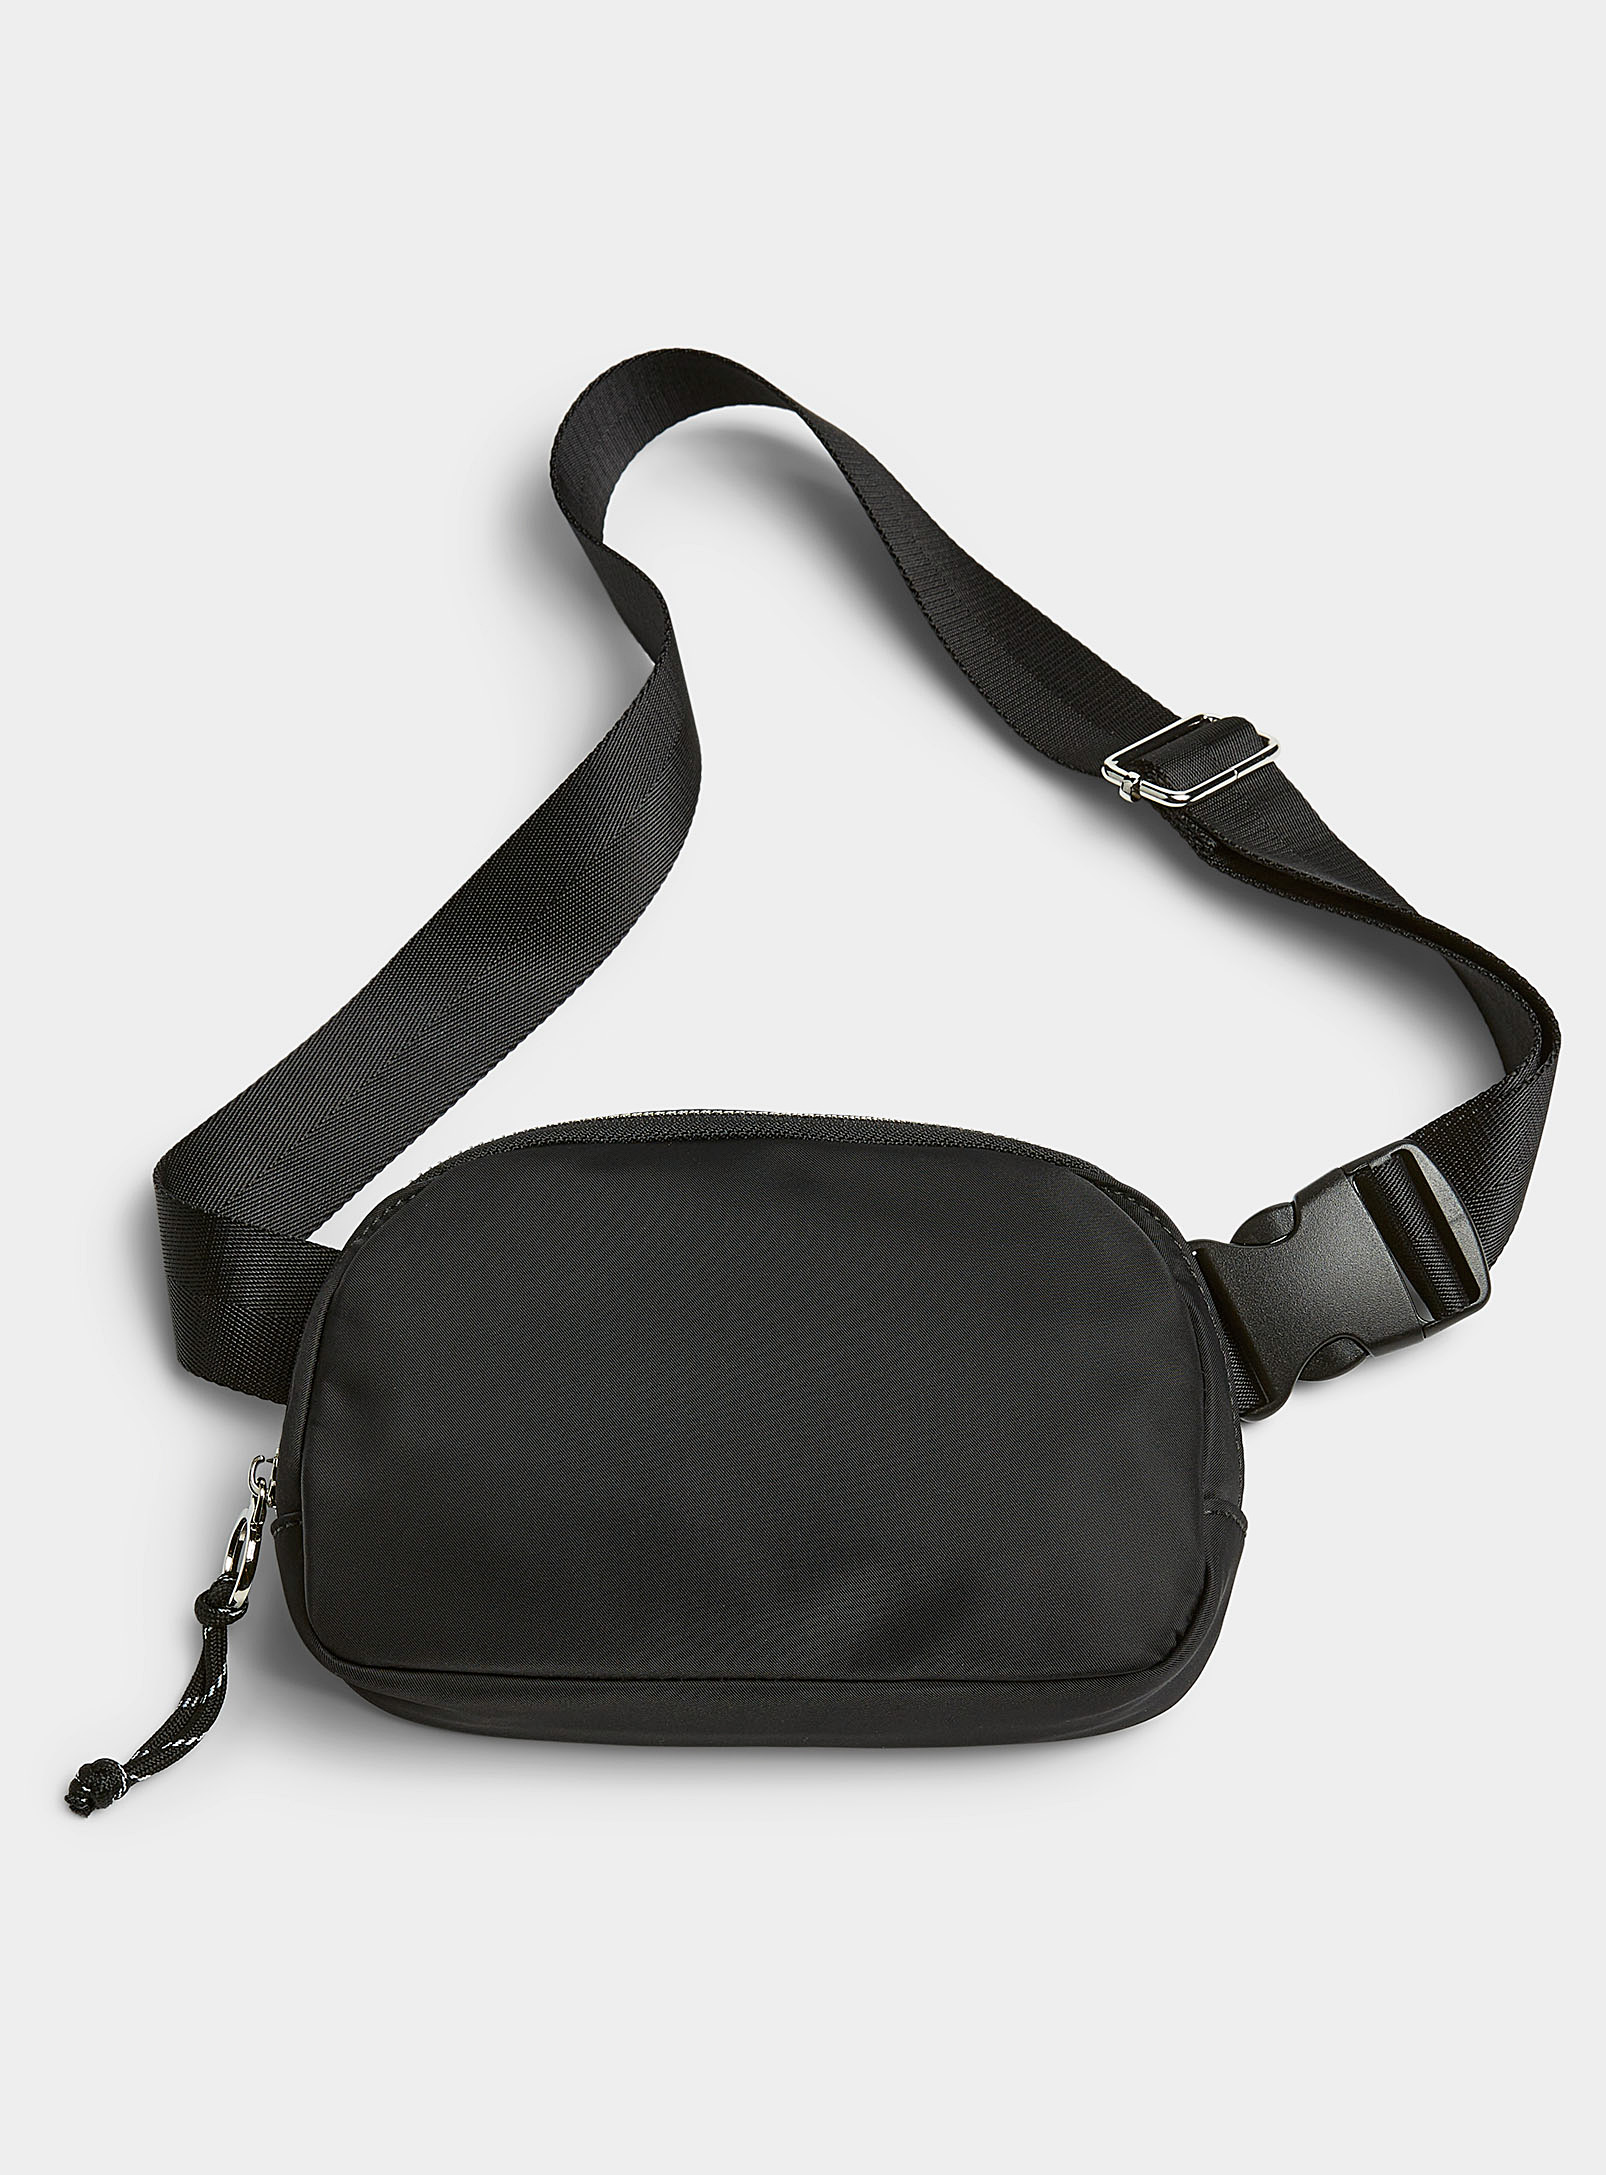 Simons - Women's Half-moon recycled fabric belt bag